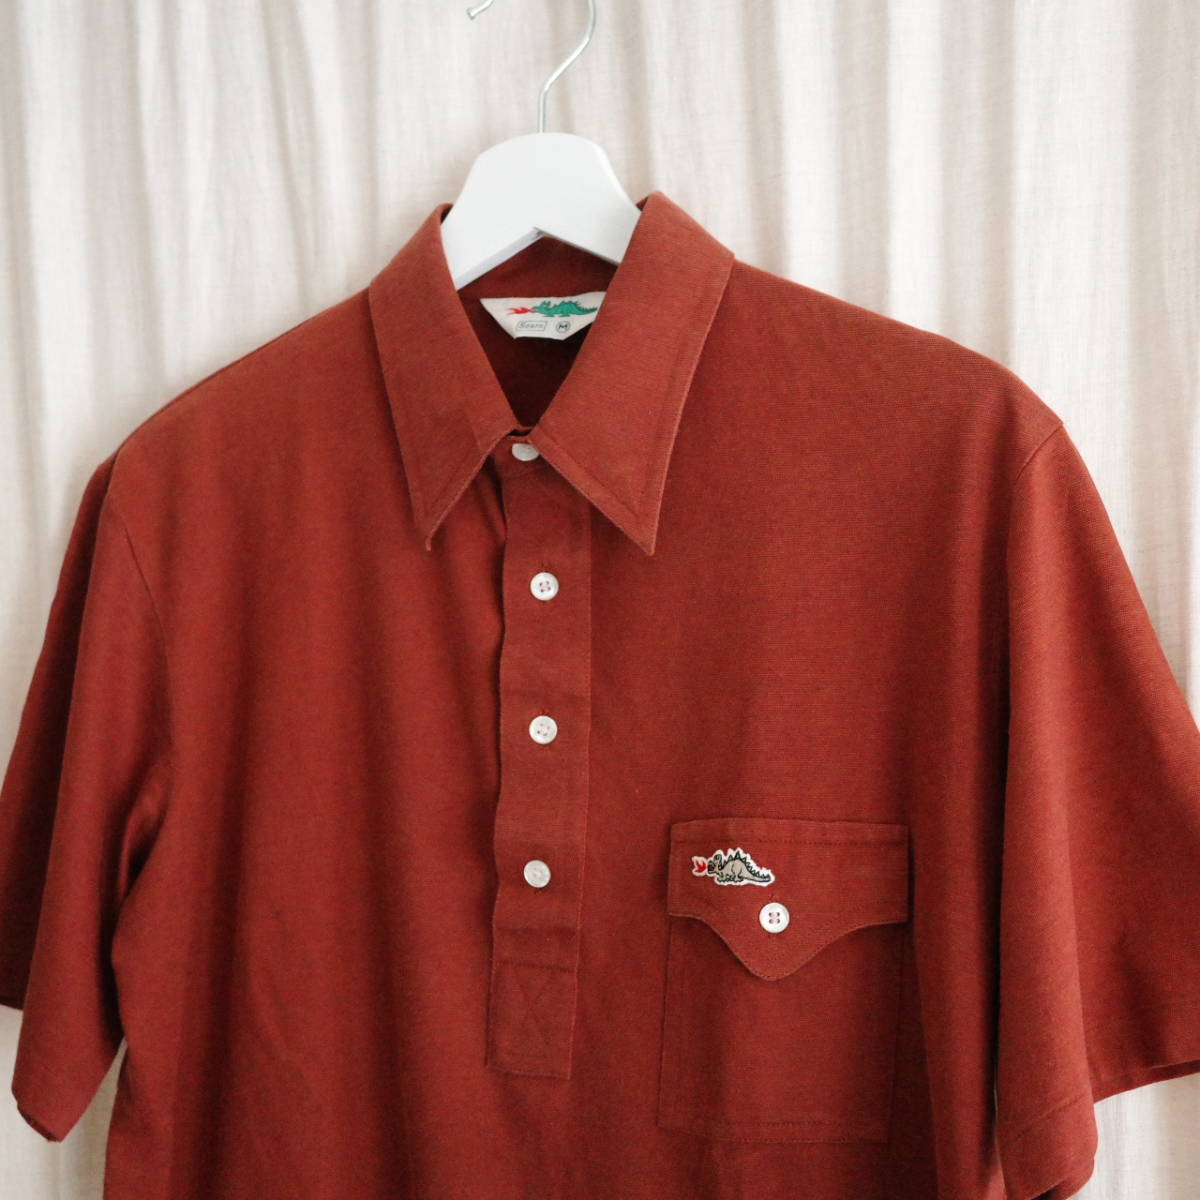 80s vintage シアーズ 半袖 ポロシャツ Mサイズ Sears 4button polo shirt_画像2